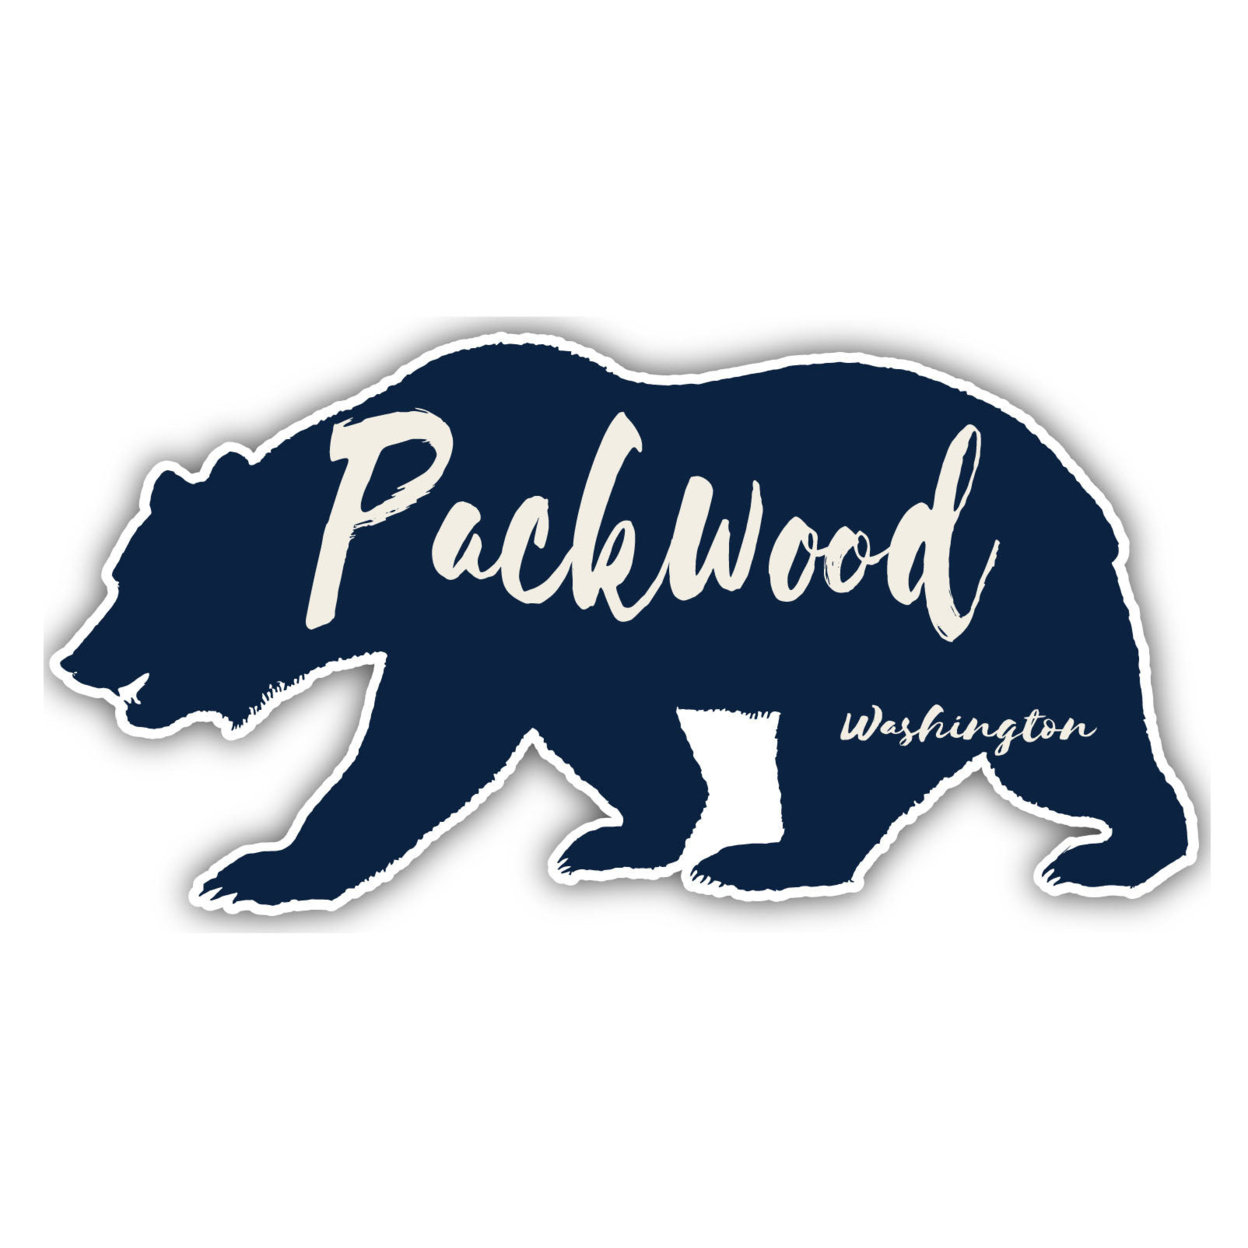 Packwood Washington Souvenir Decorative Stickers (Choose Theme And Size) - Single Unit, 4-Inch, Bear